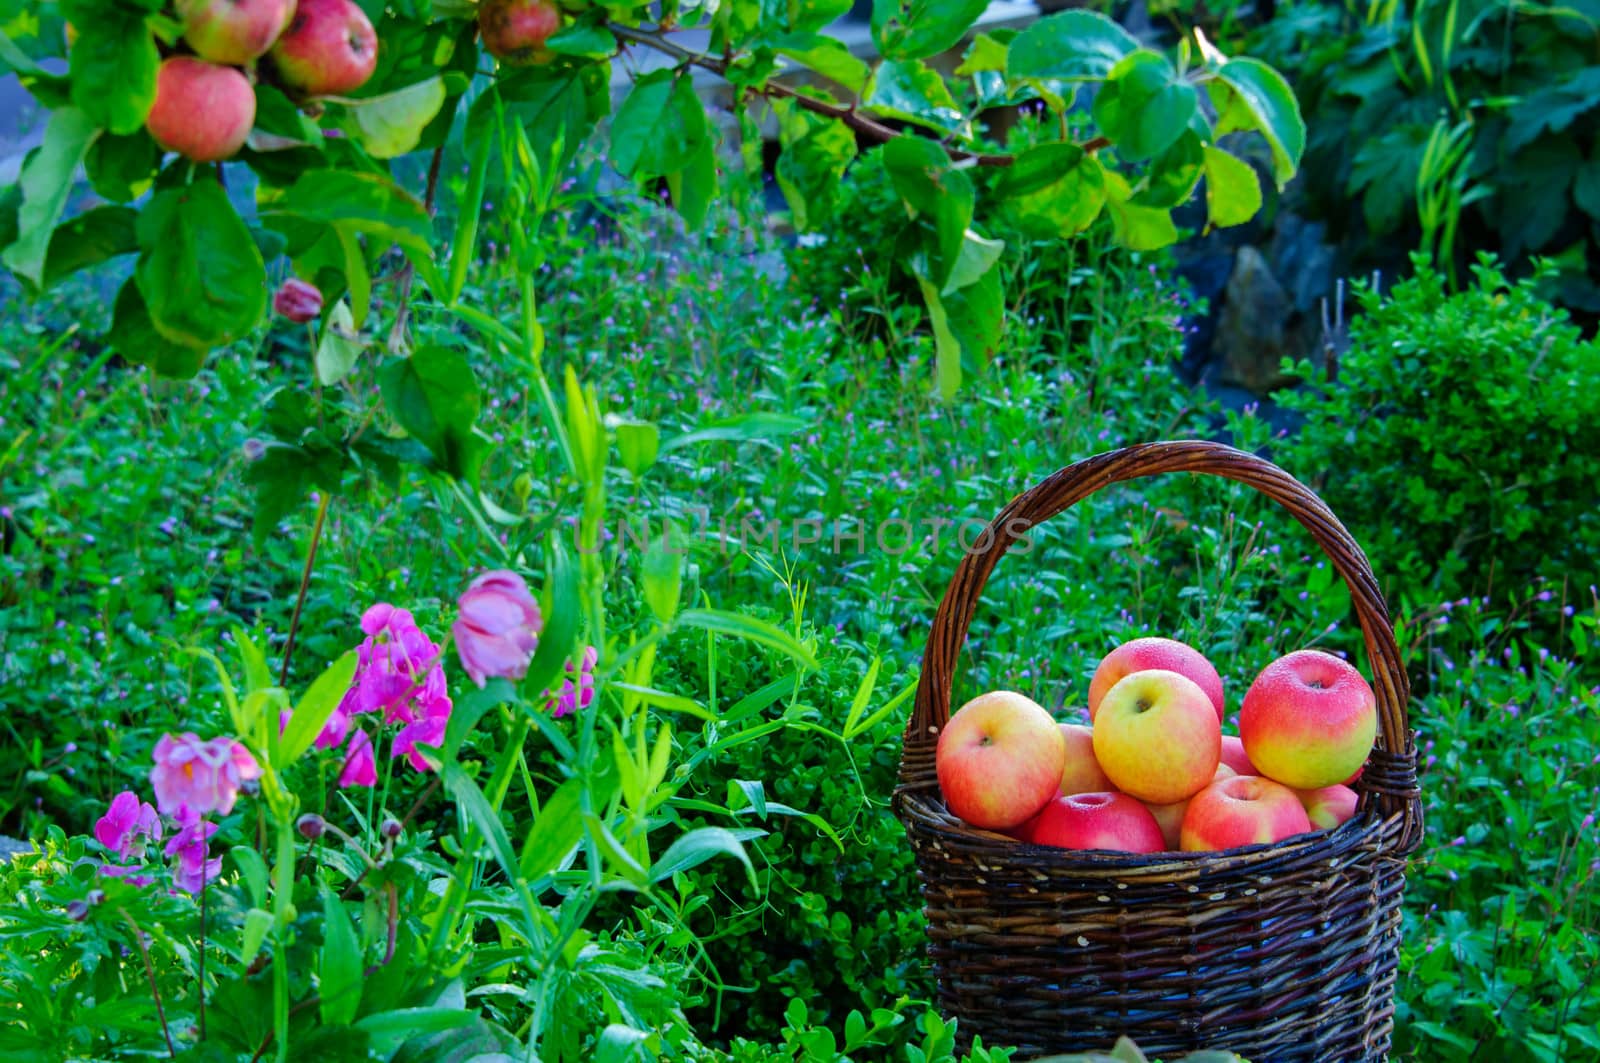 Apples in a garden by GryT